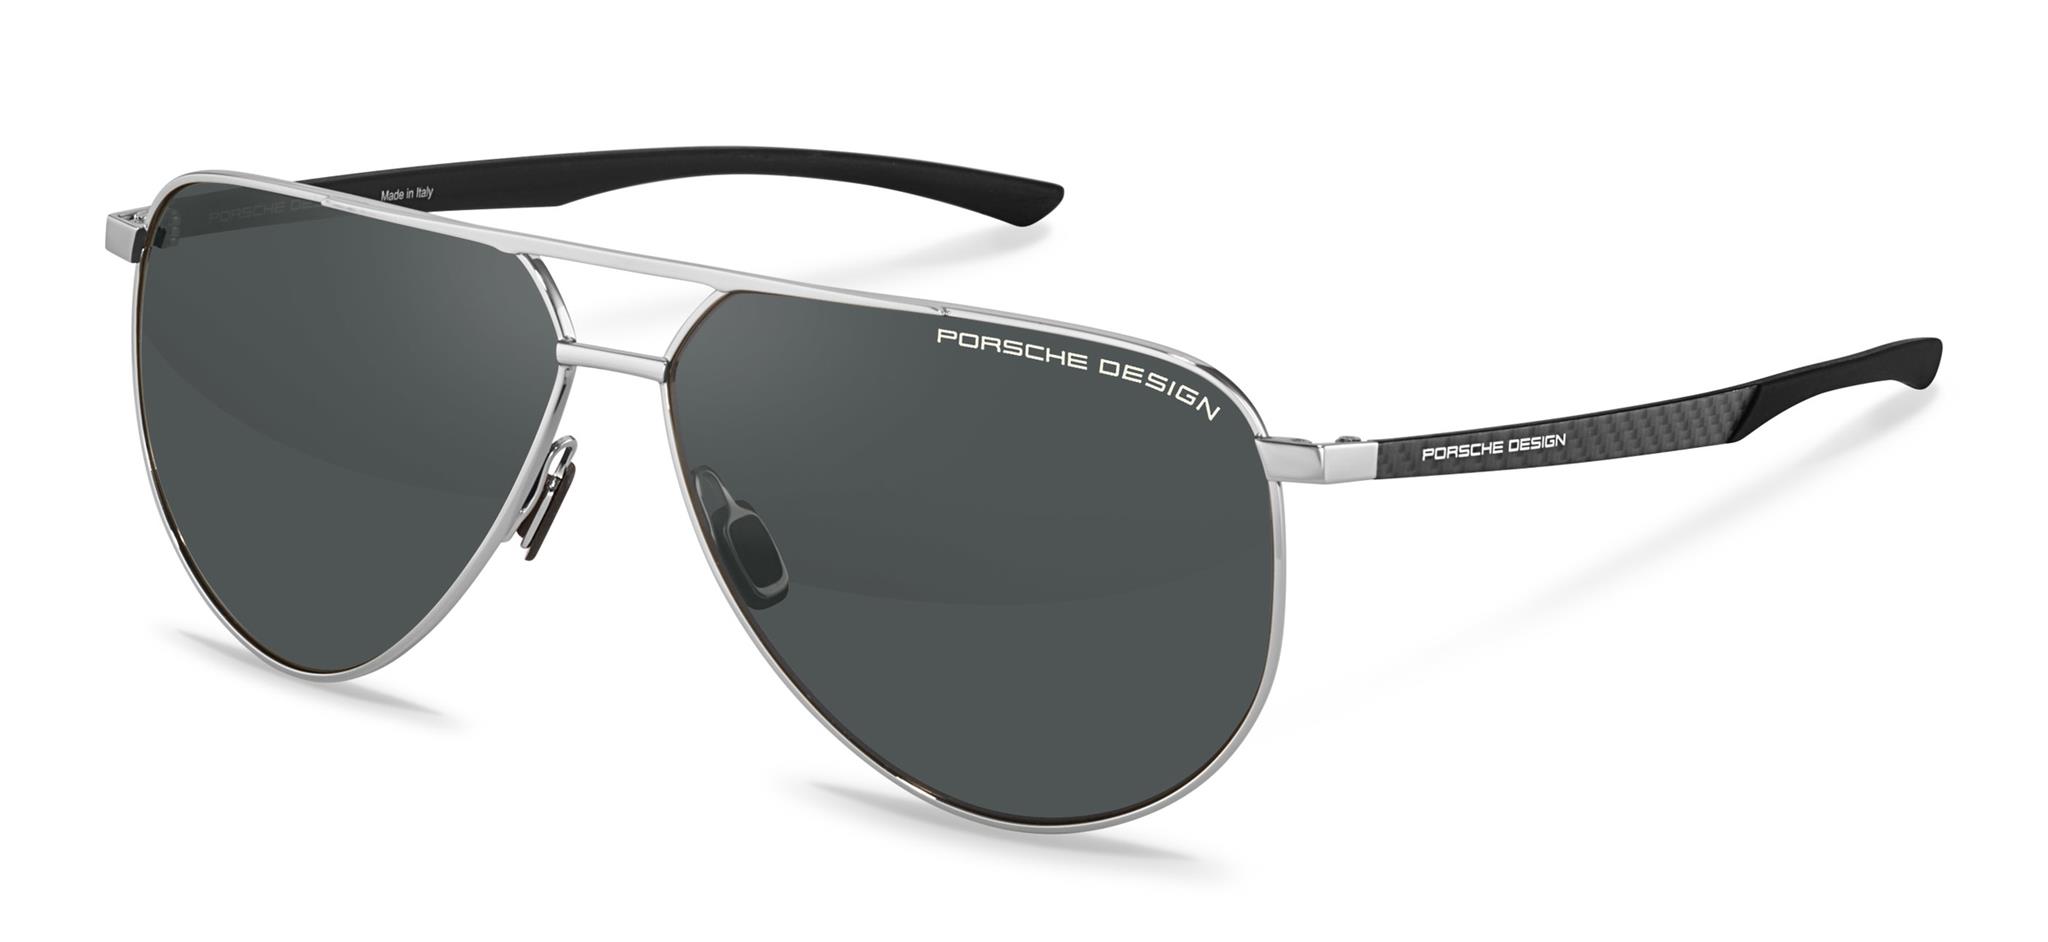 Porsche Design sunglasses